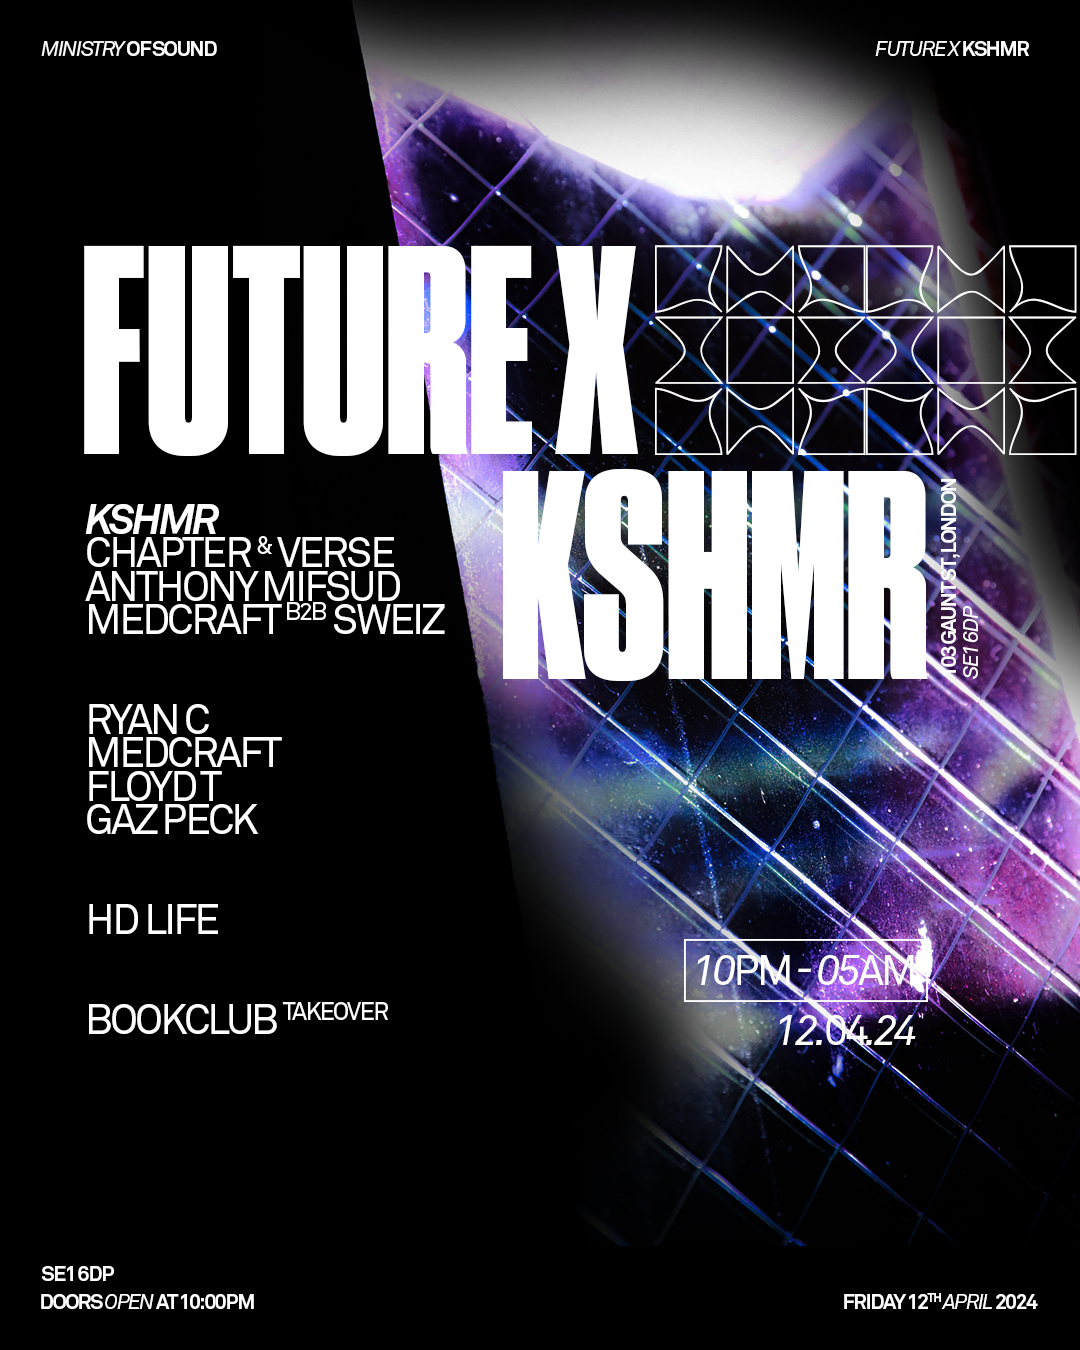 FUTURE x HD Life Pres. KSHMR - フライヤー表